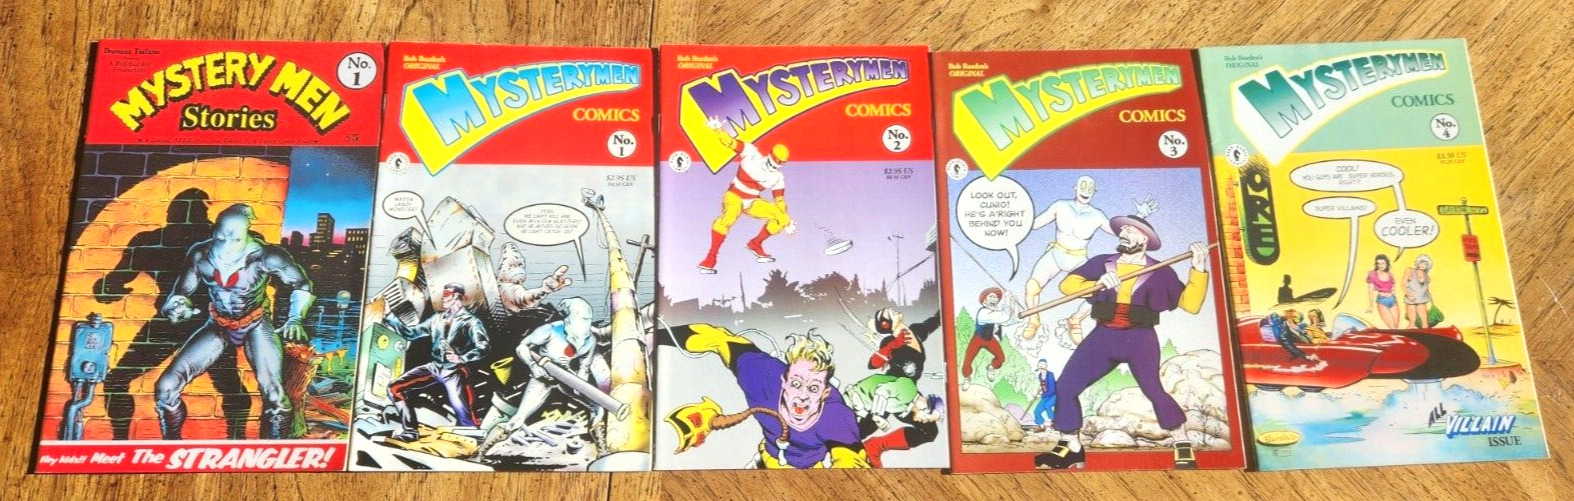 Mystery Men Stories # 1 & Mystery Men # 1-4 1996 & 1999 in High Grade.